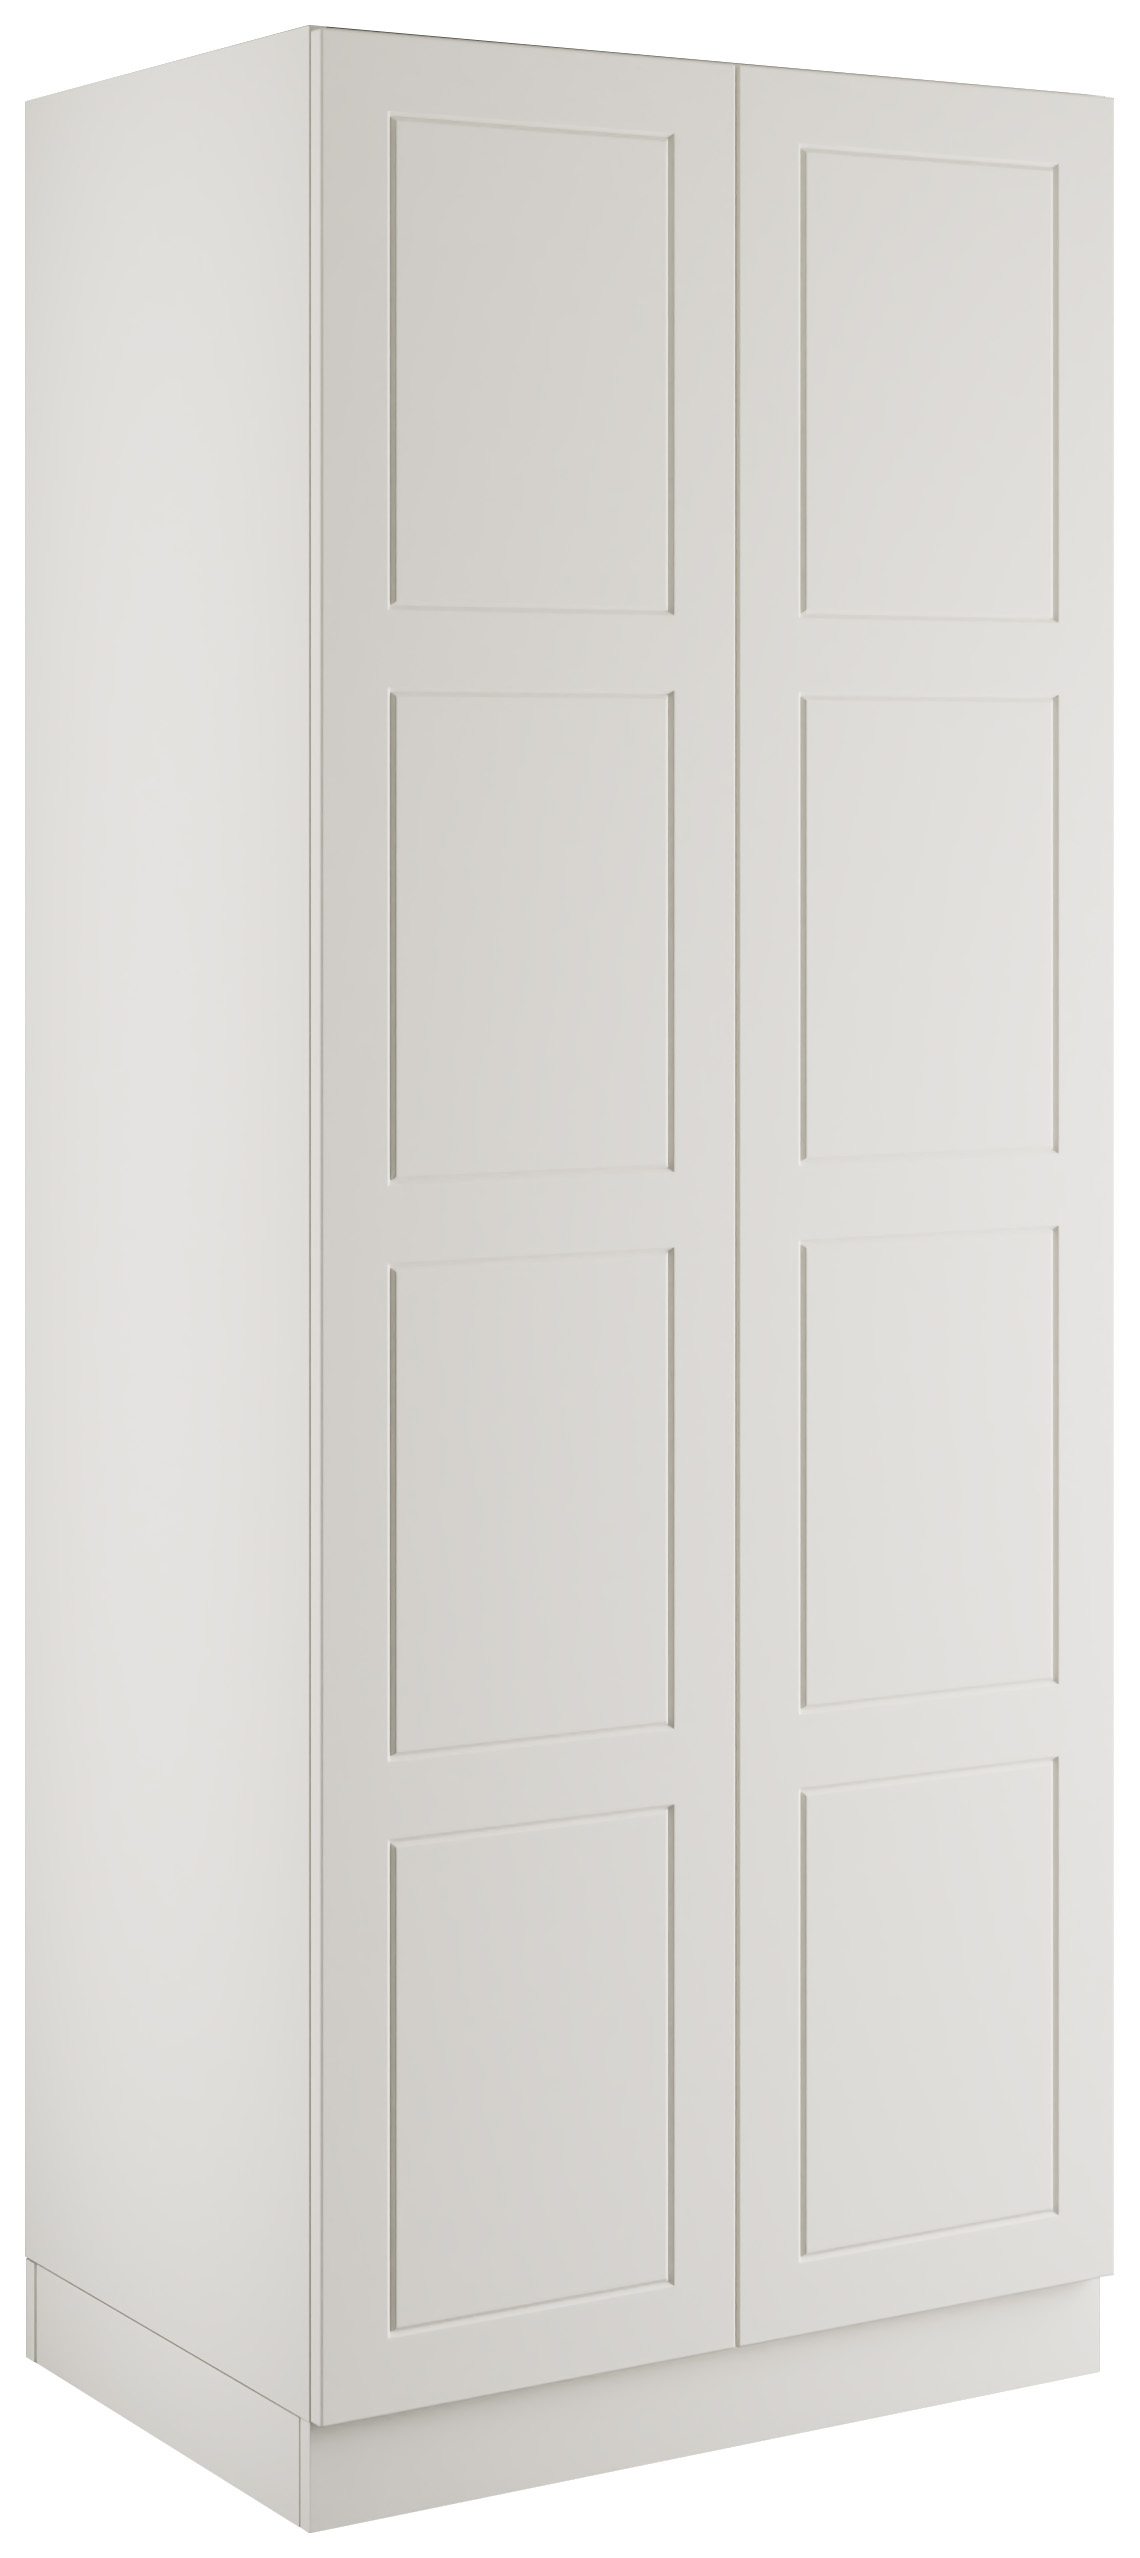 Bramham White Double Wardrobe with Single Rail & Shelves - 900 x 2260 x 608mm